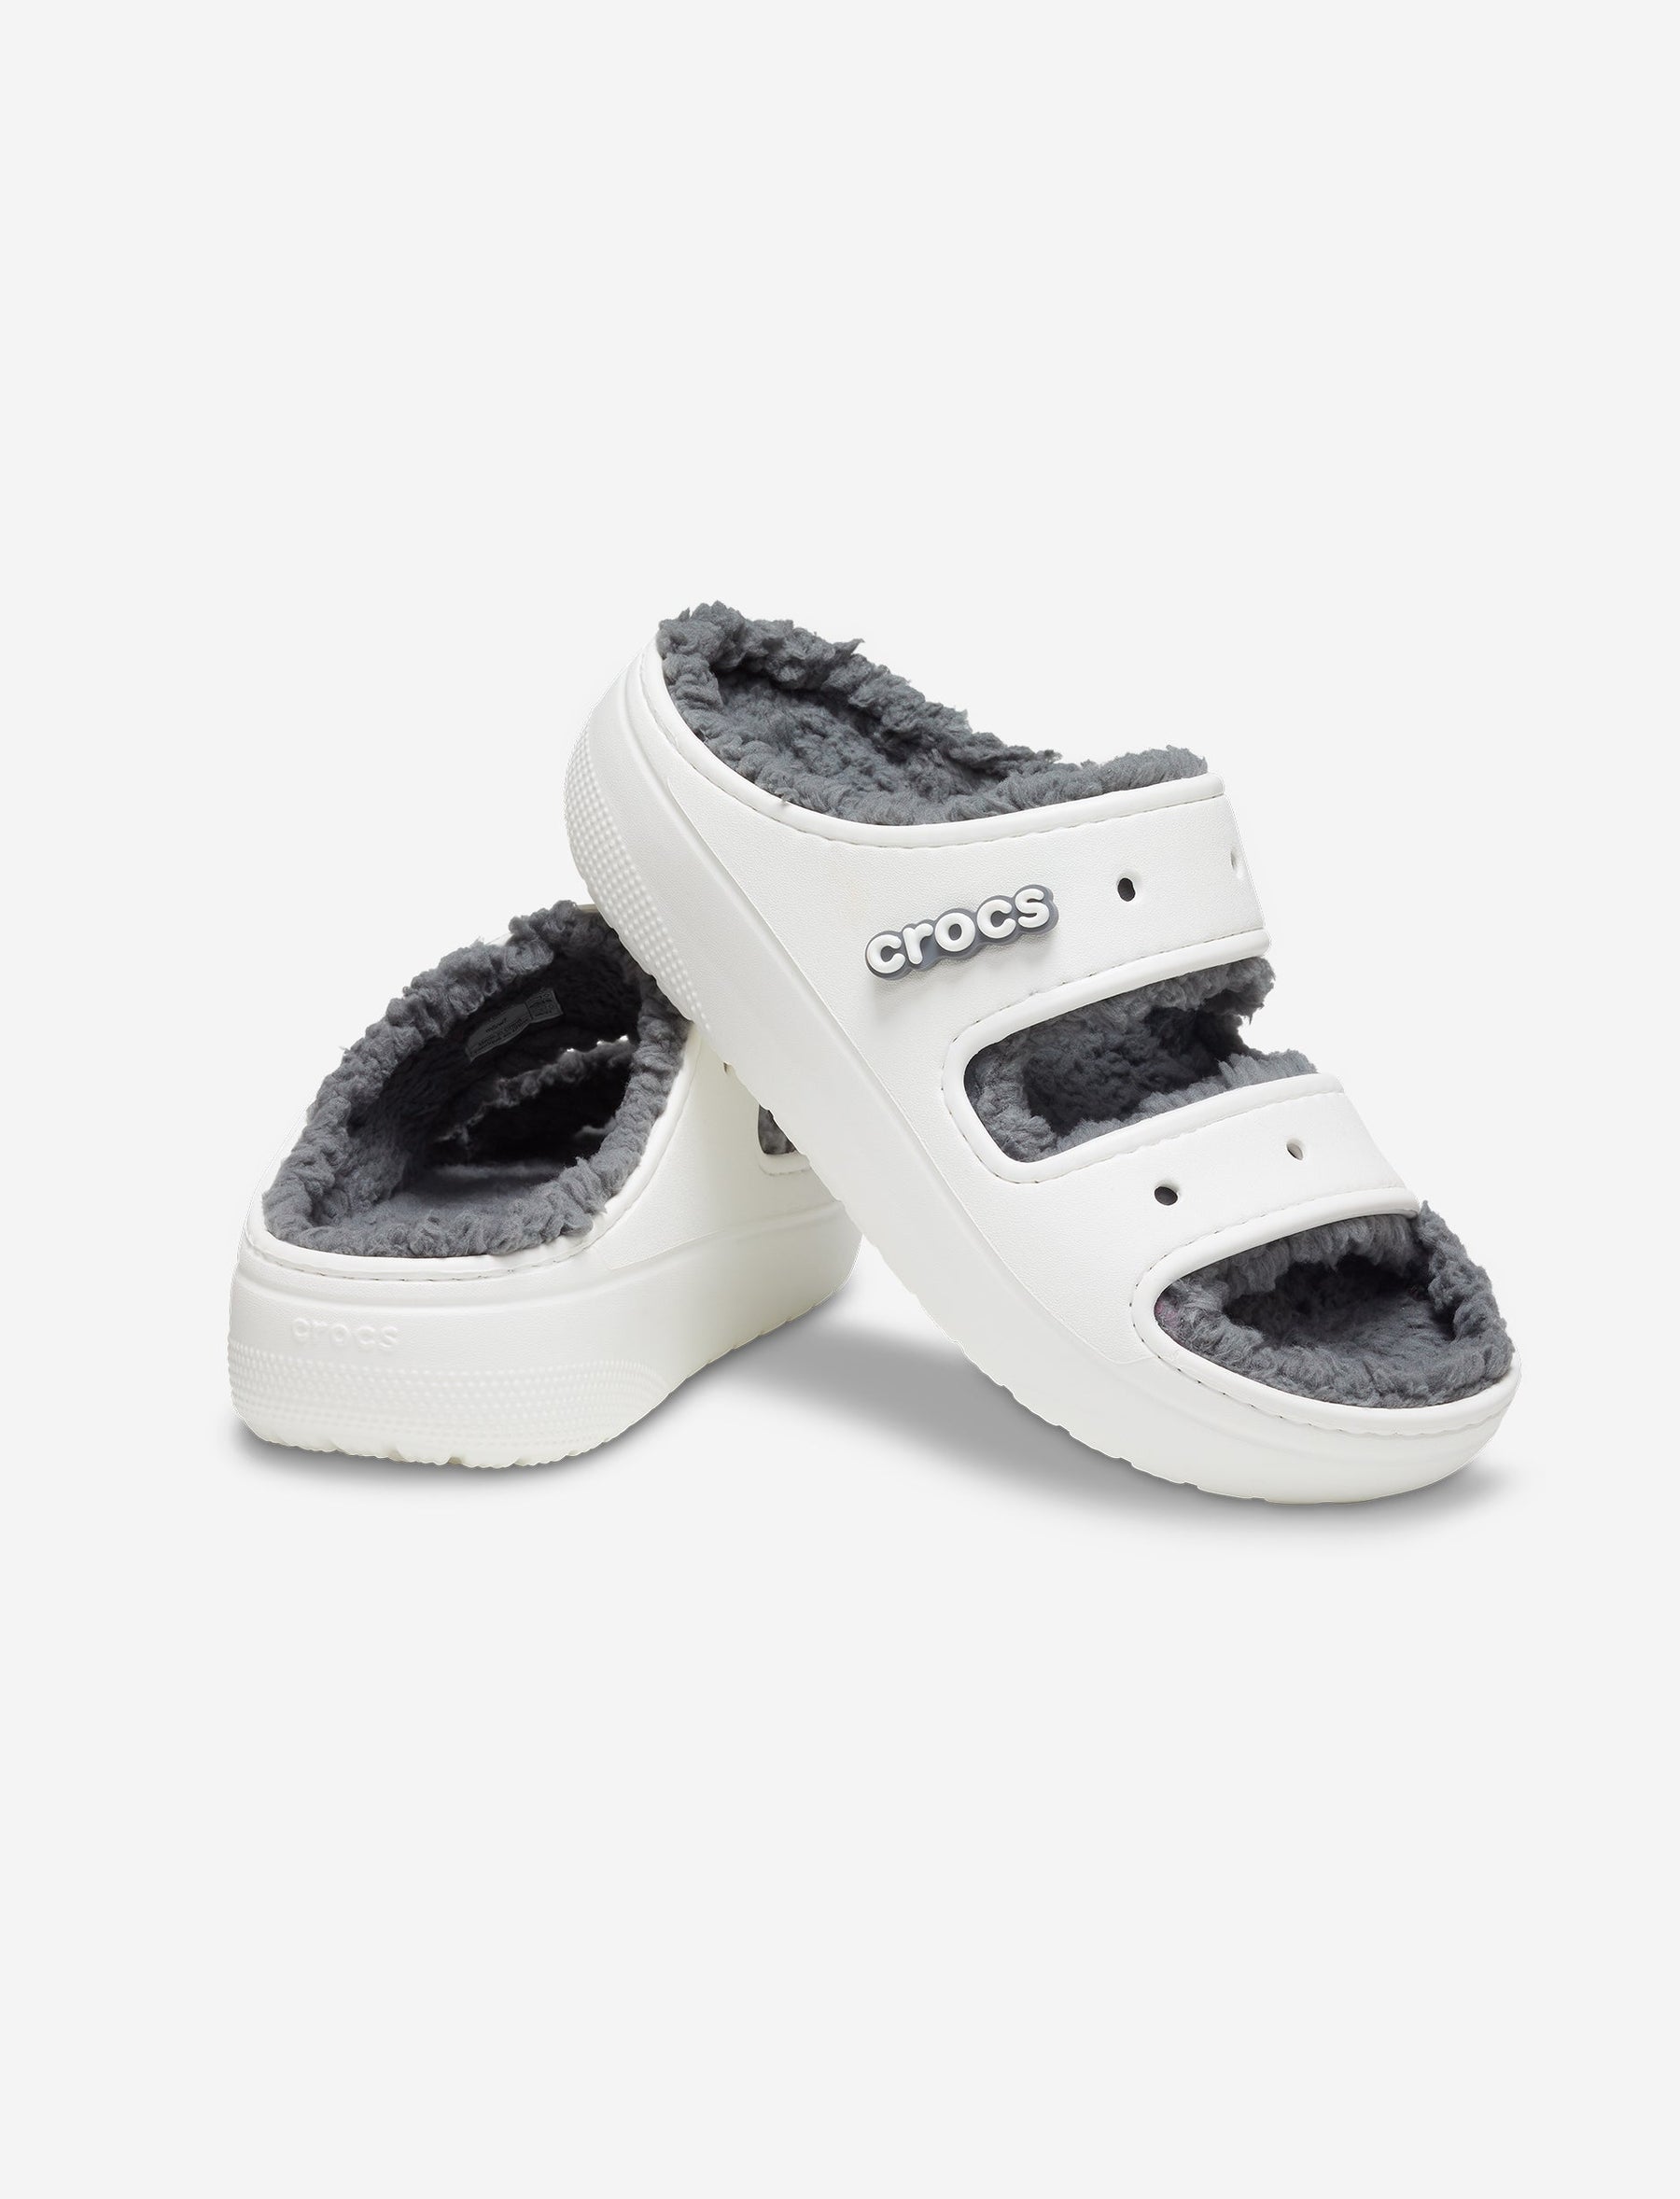 Crocs Classic Cozzzy Sandal - כפכפי קרוקס פרווה לנשים בצבע לבן-Crocs-37-38-נאקו